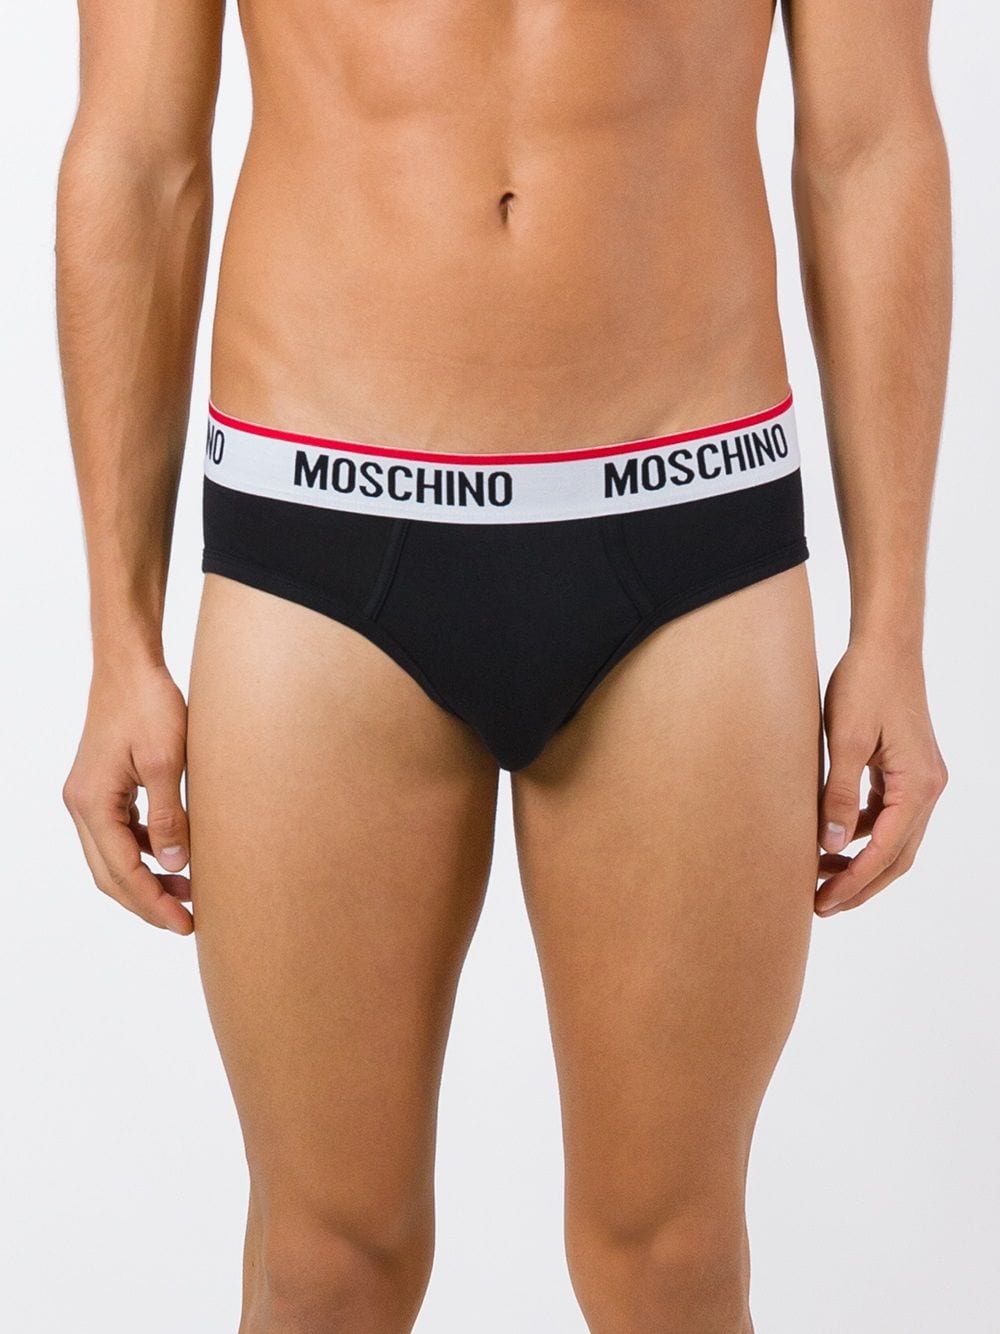 Moschino Underwear for Men - Designer – David Lawrence